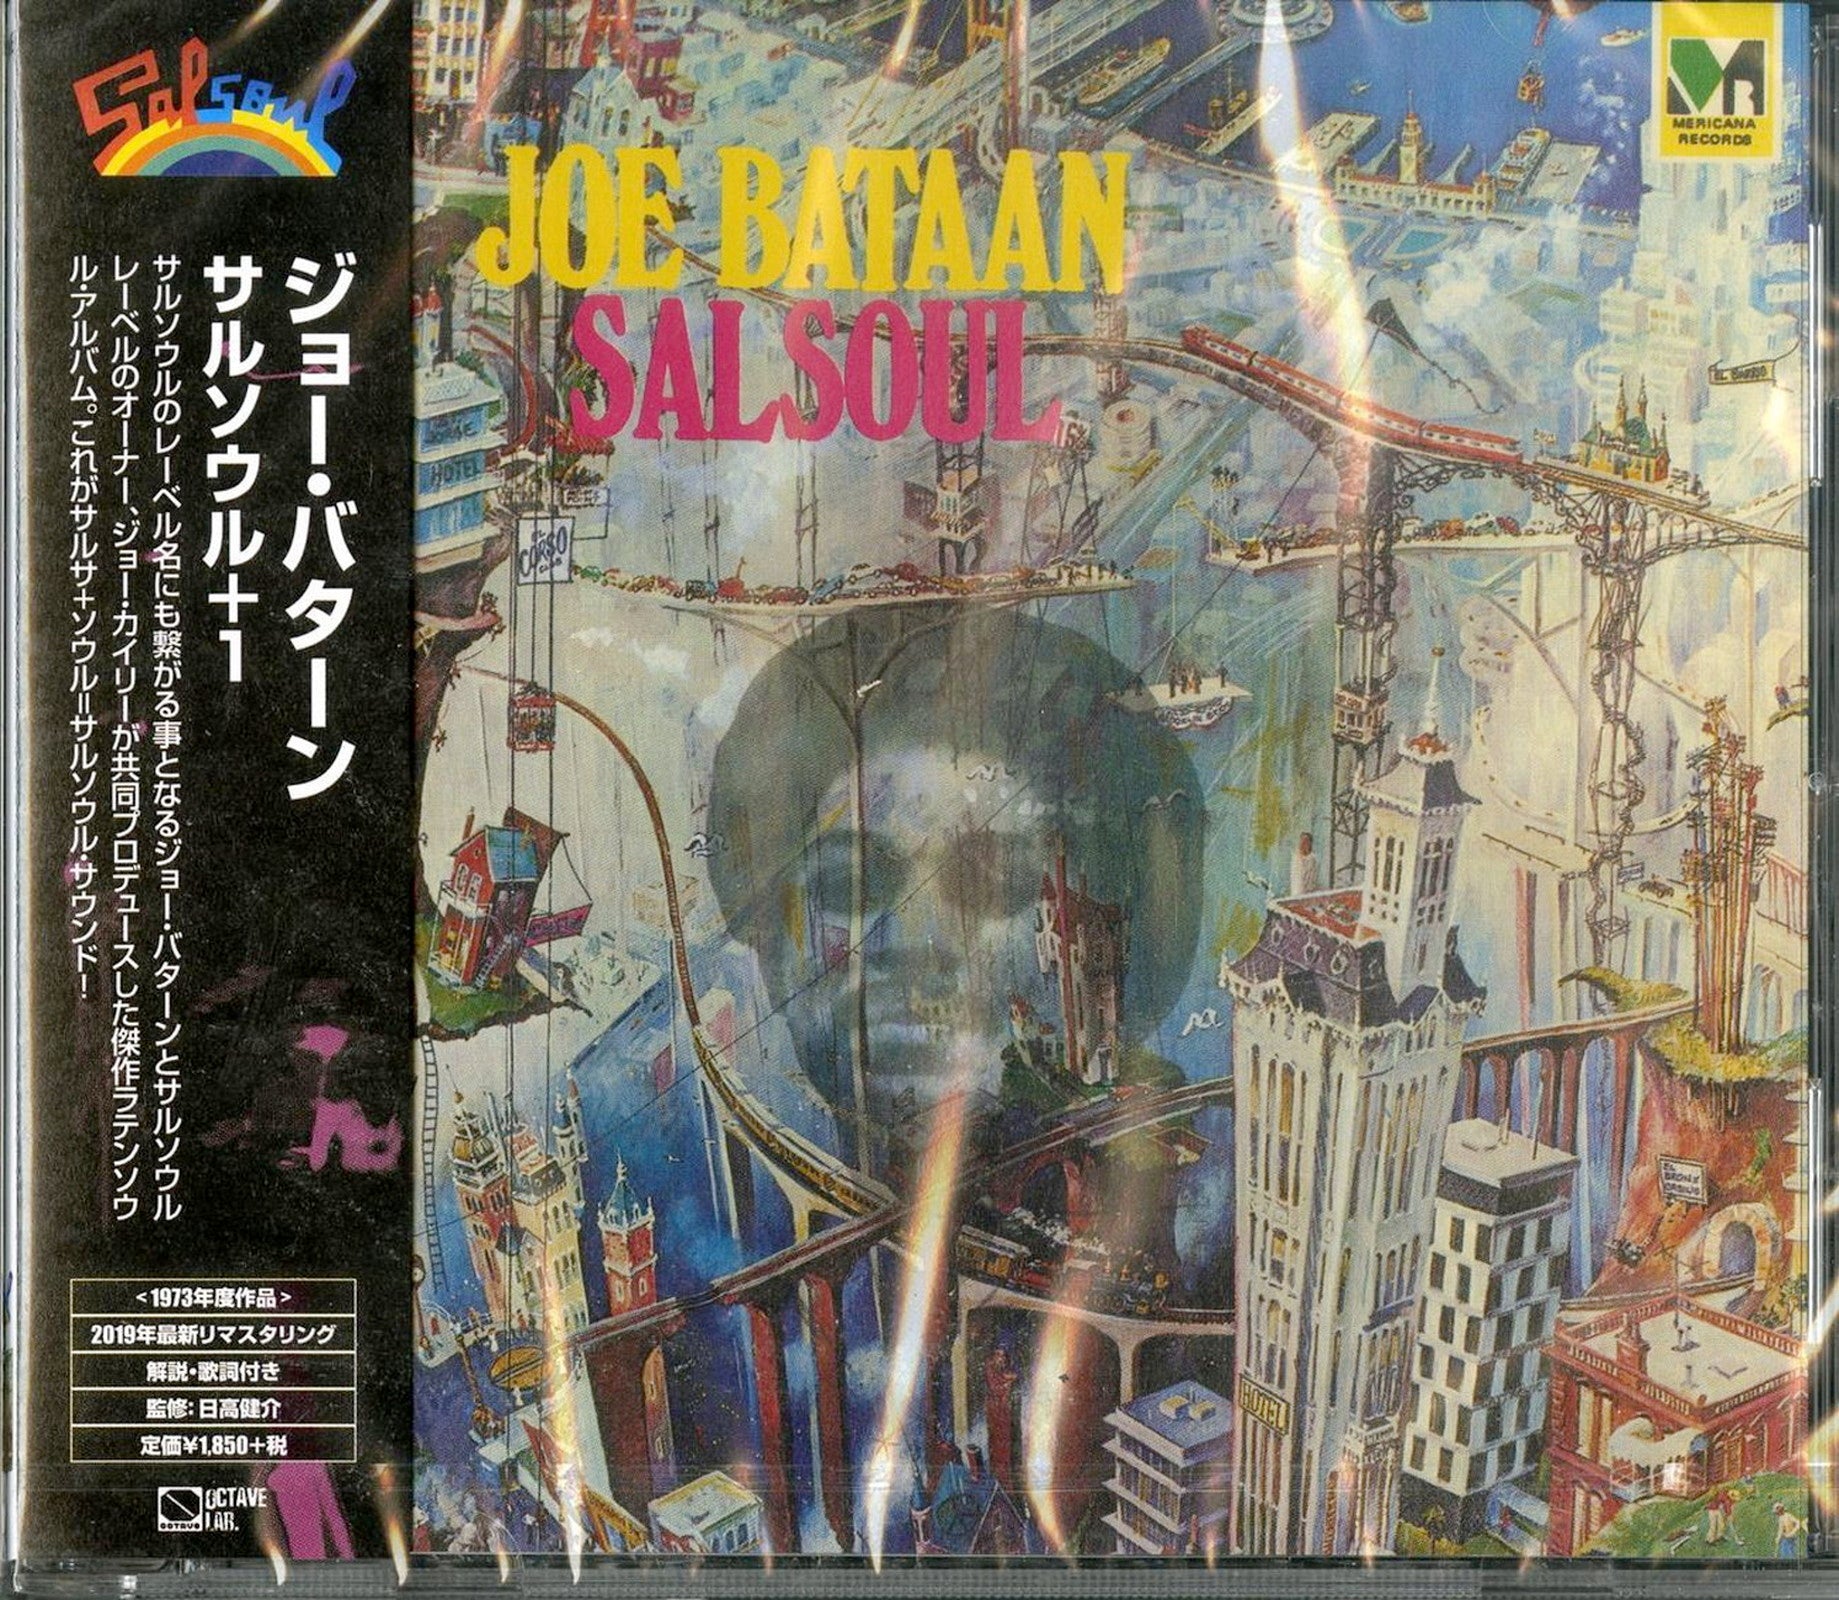 Joe Bataan - Salsoul+1 - Japan CD Bonus Track Limited Edition – CDs Vinyl  Japan Store